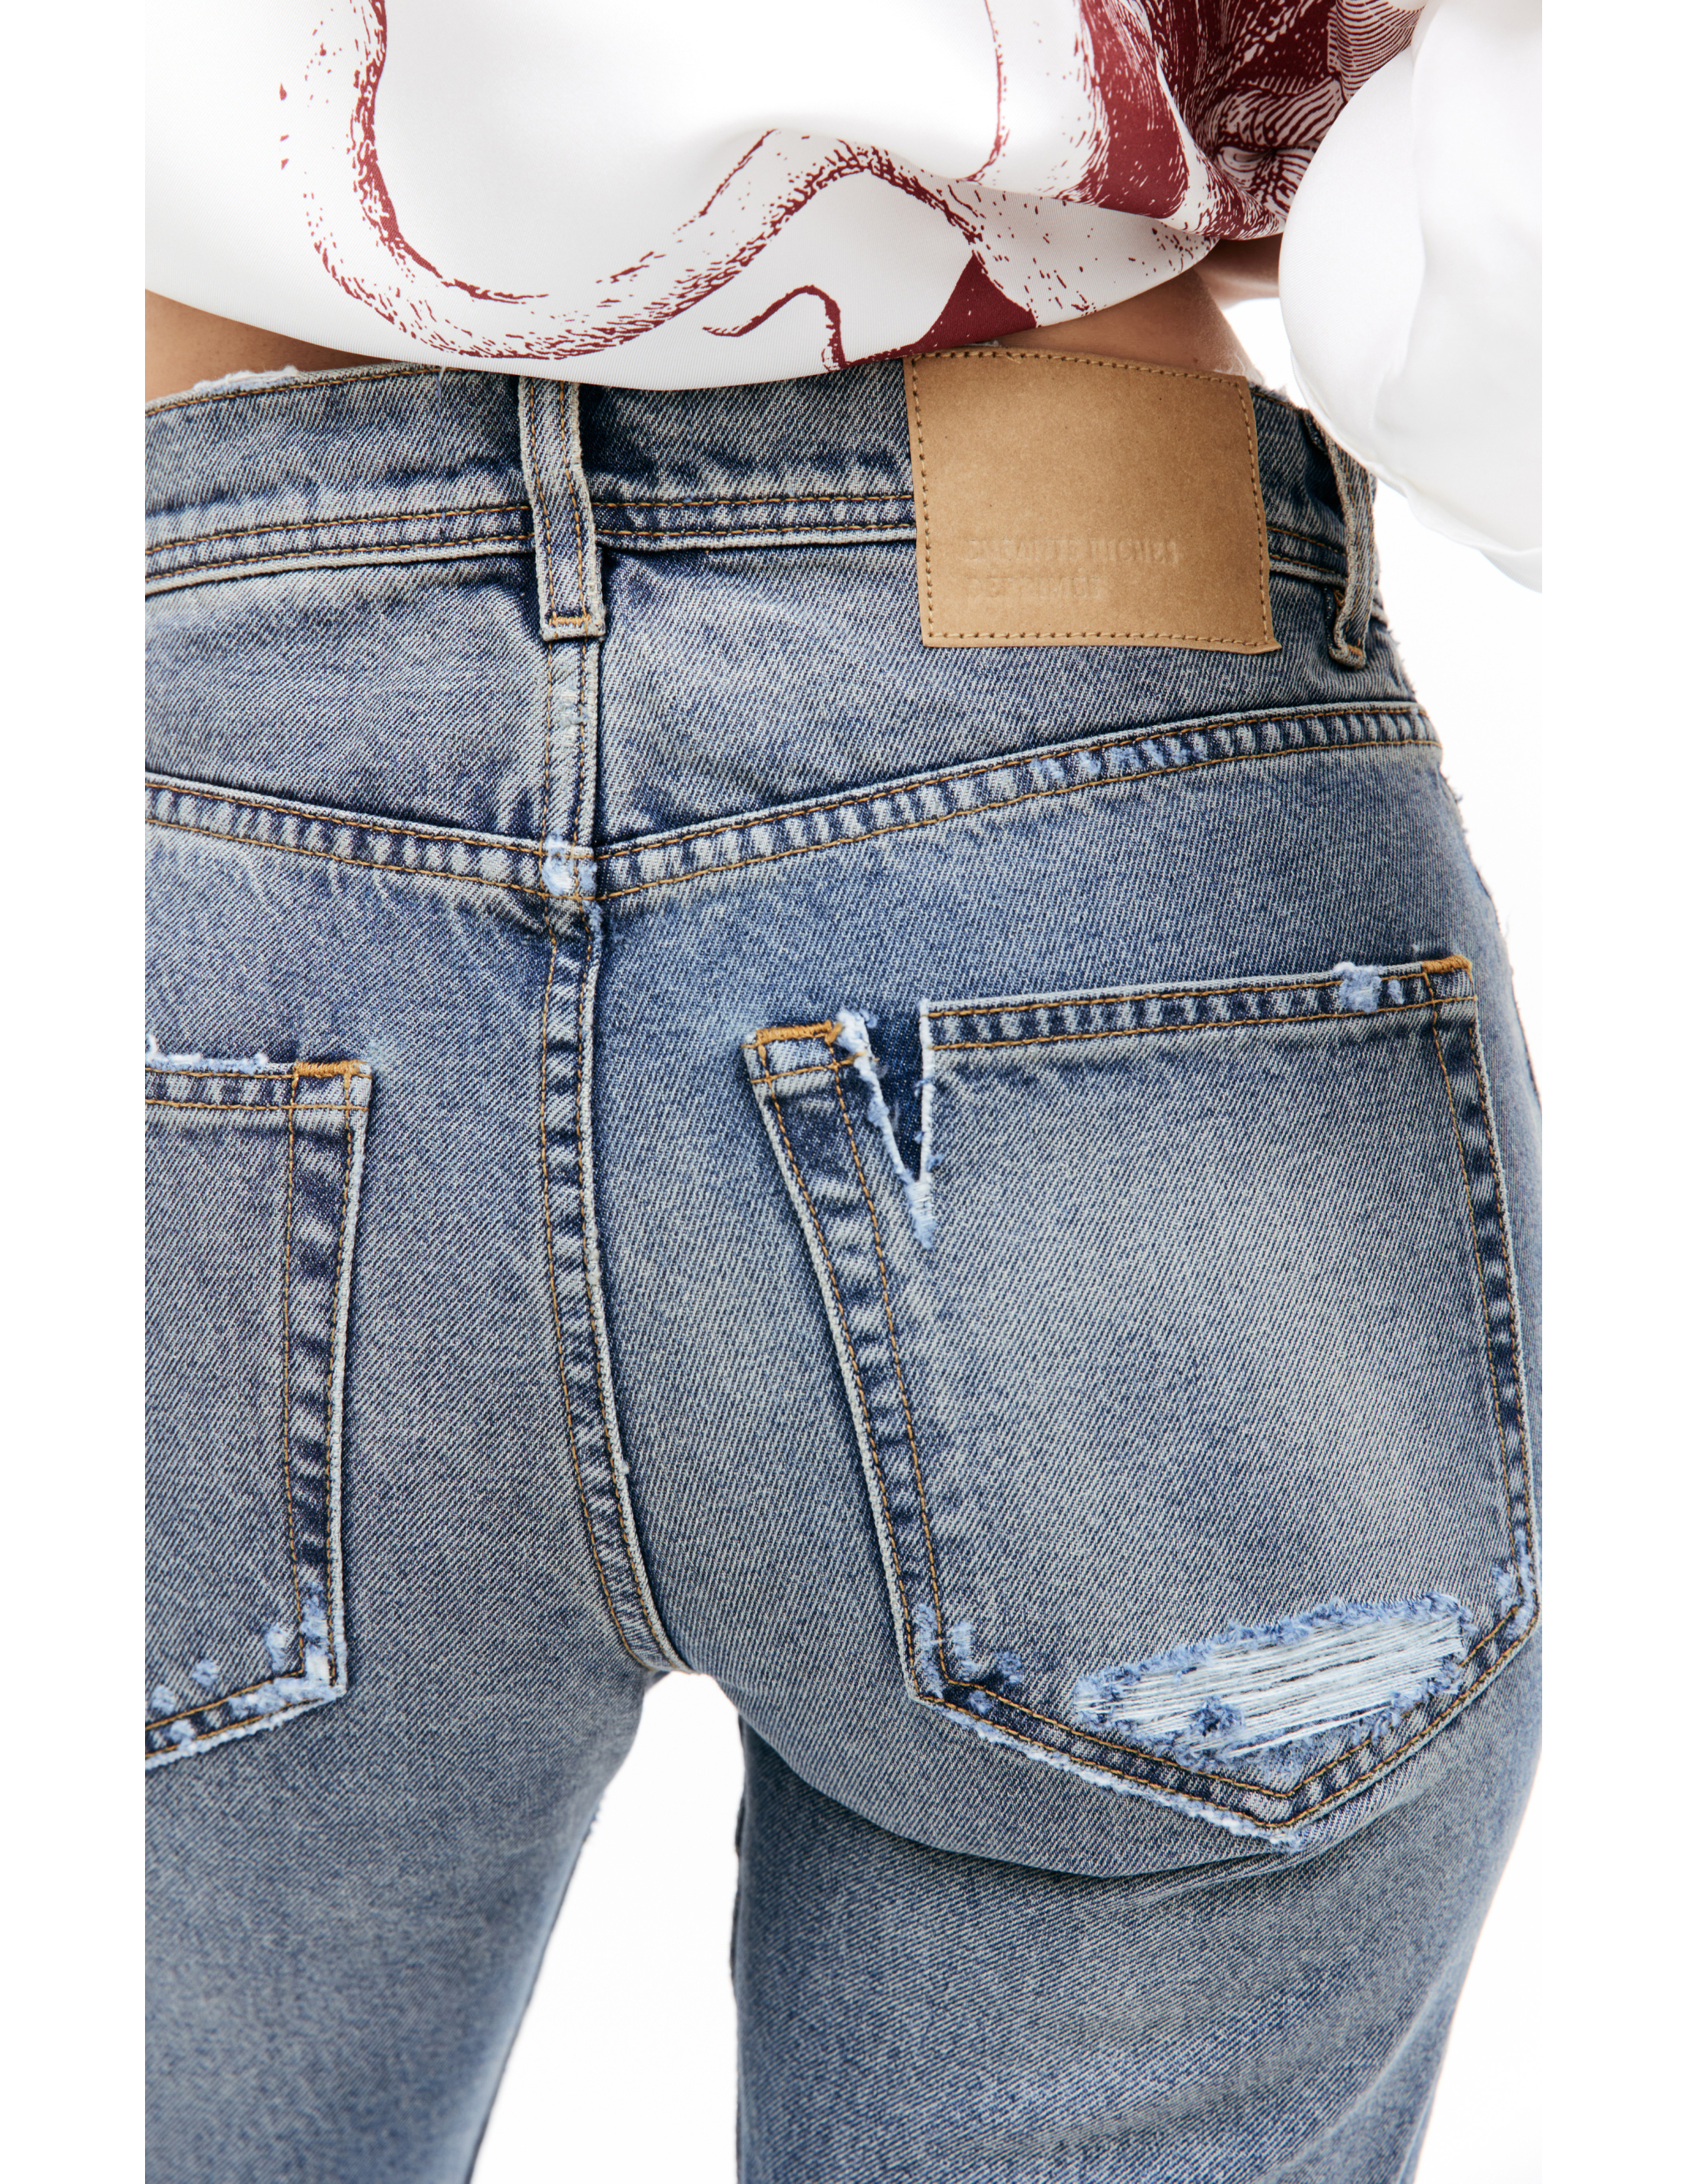 Рваные джинсы клеш Enfants Riches Deprimes 050-340, размер 28;30 - фото 4